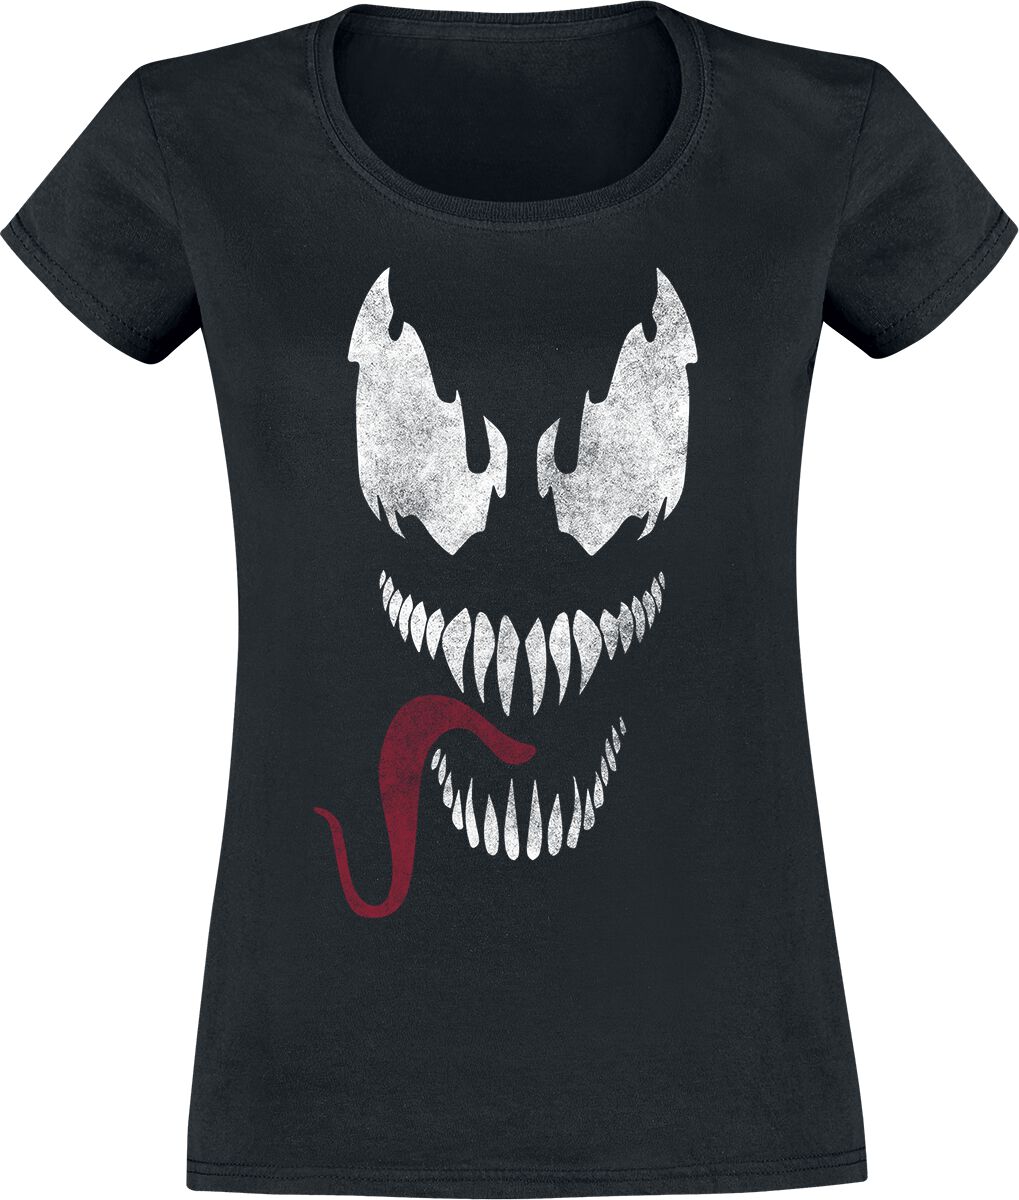 Venom (Marvel) Tongue T-Shirt black